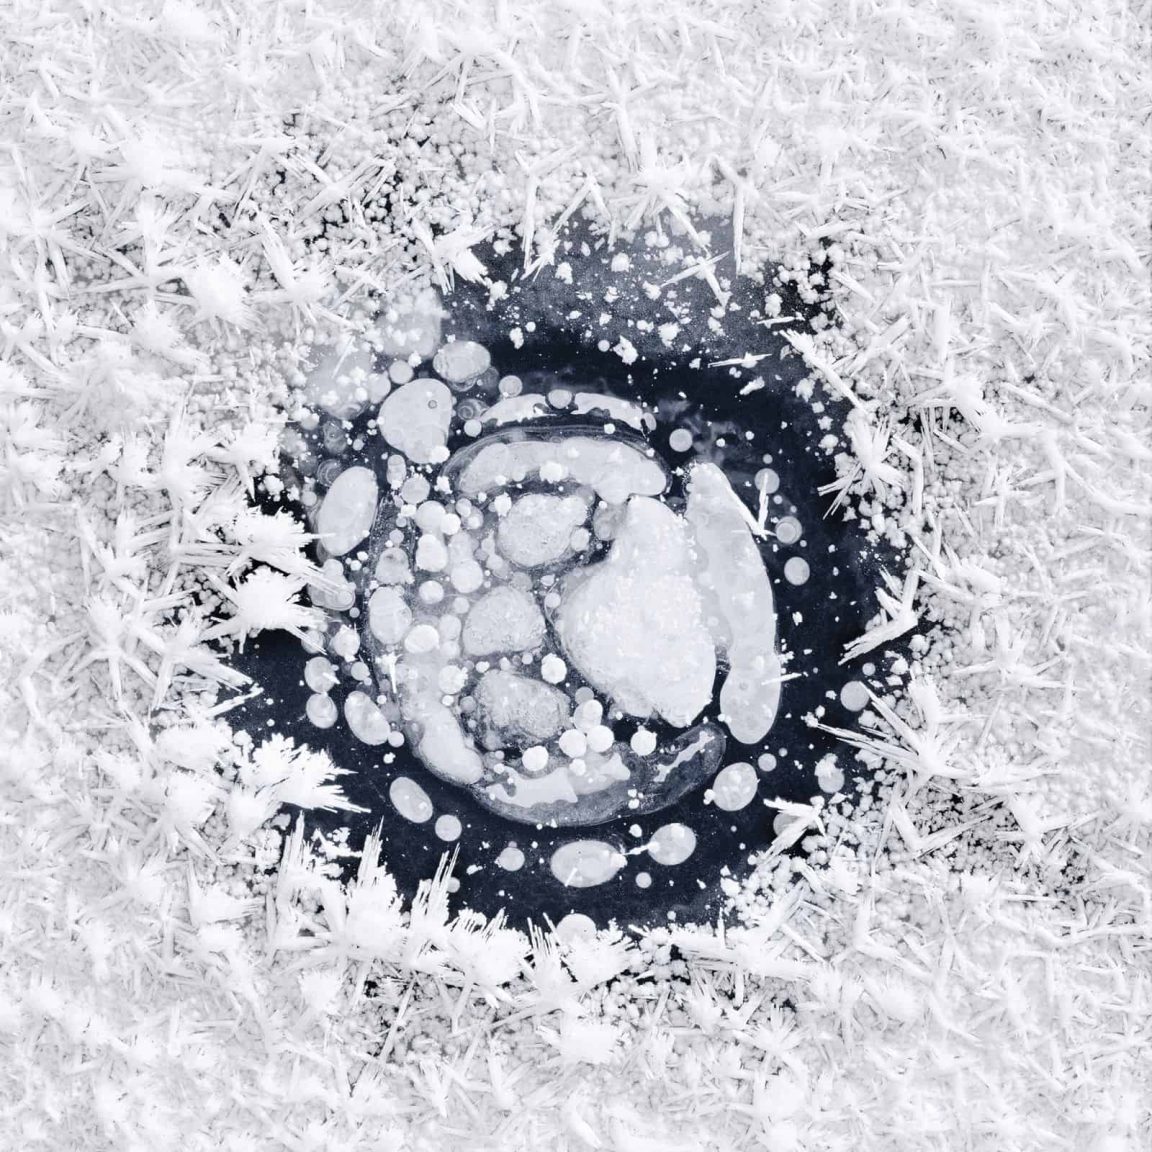 frozen bubble formations ryota kajita 2